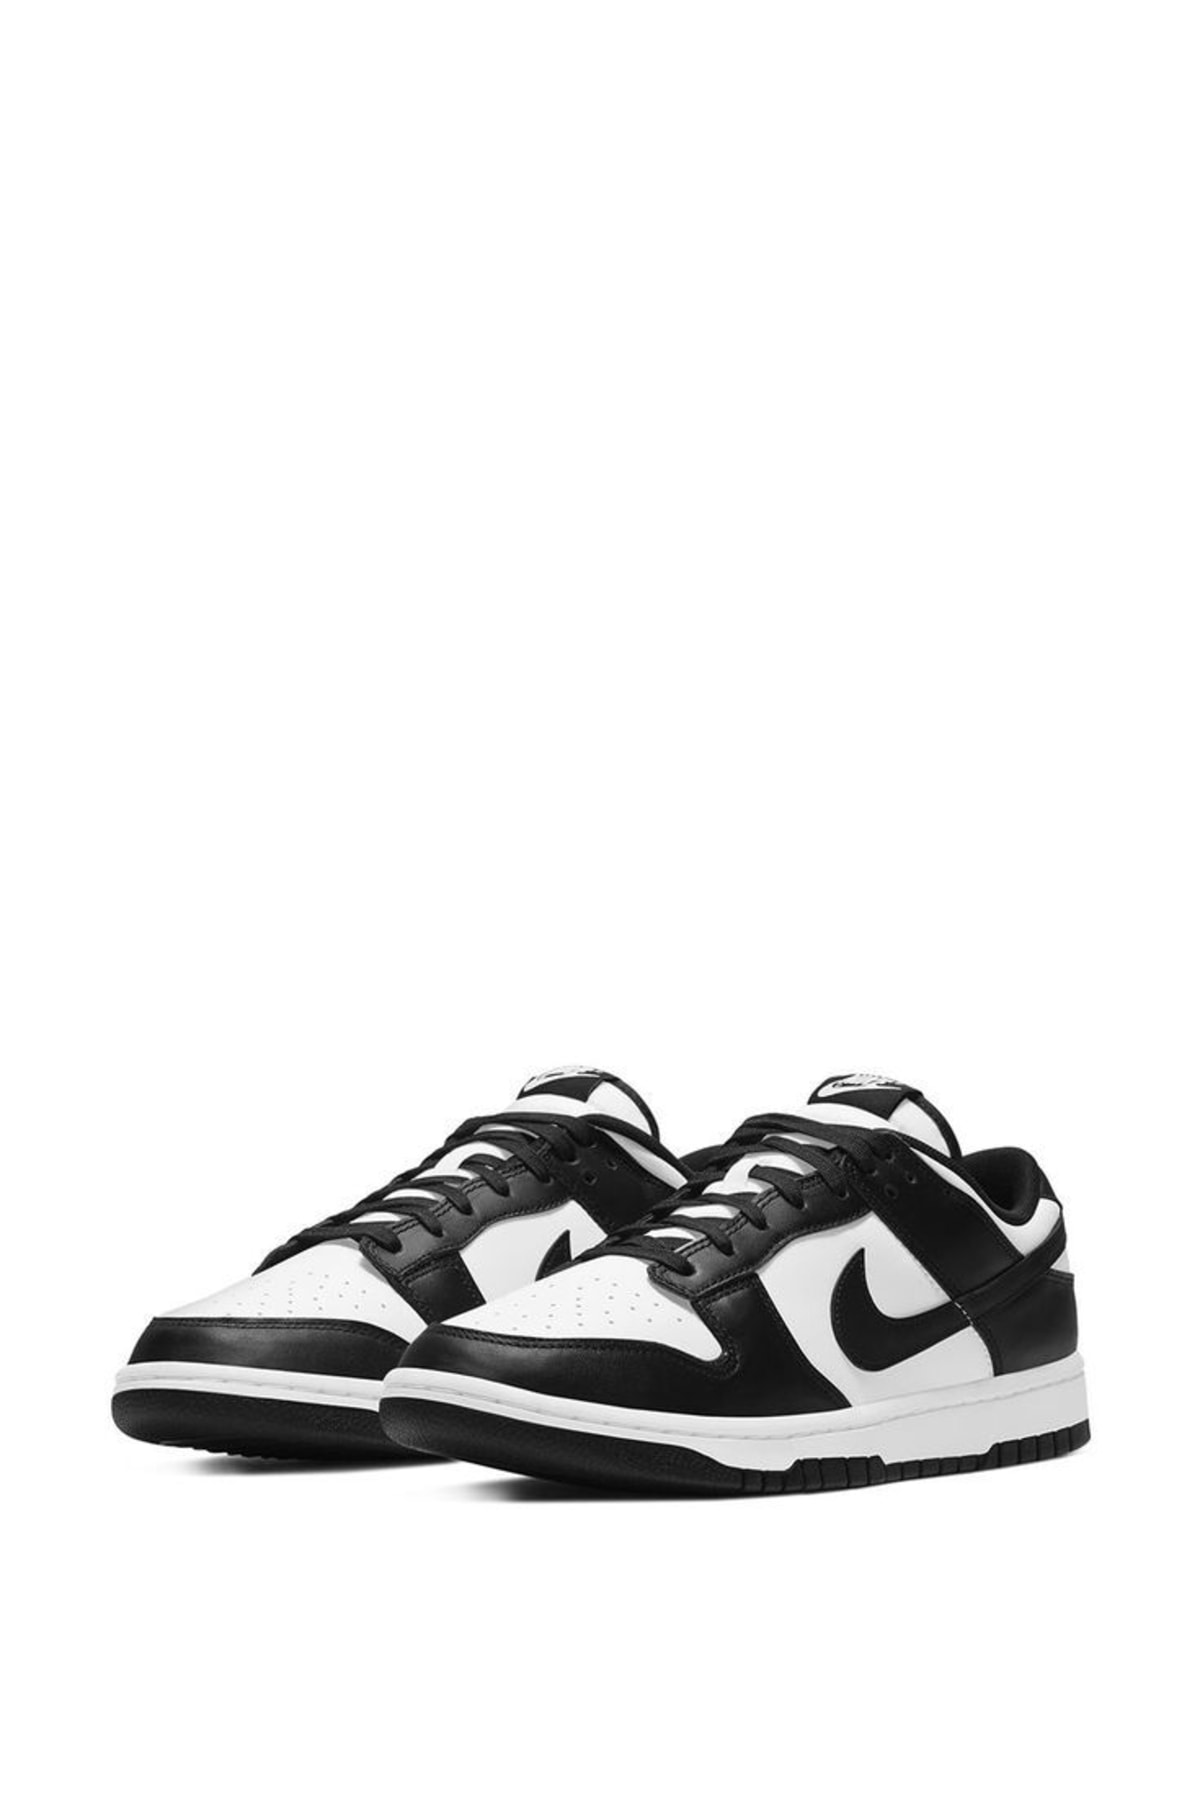 Nike Dunk Low Retro White Black Dd1391-100 Men's Sports Shoes